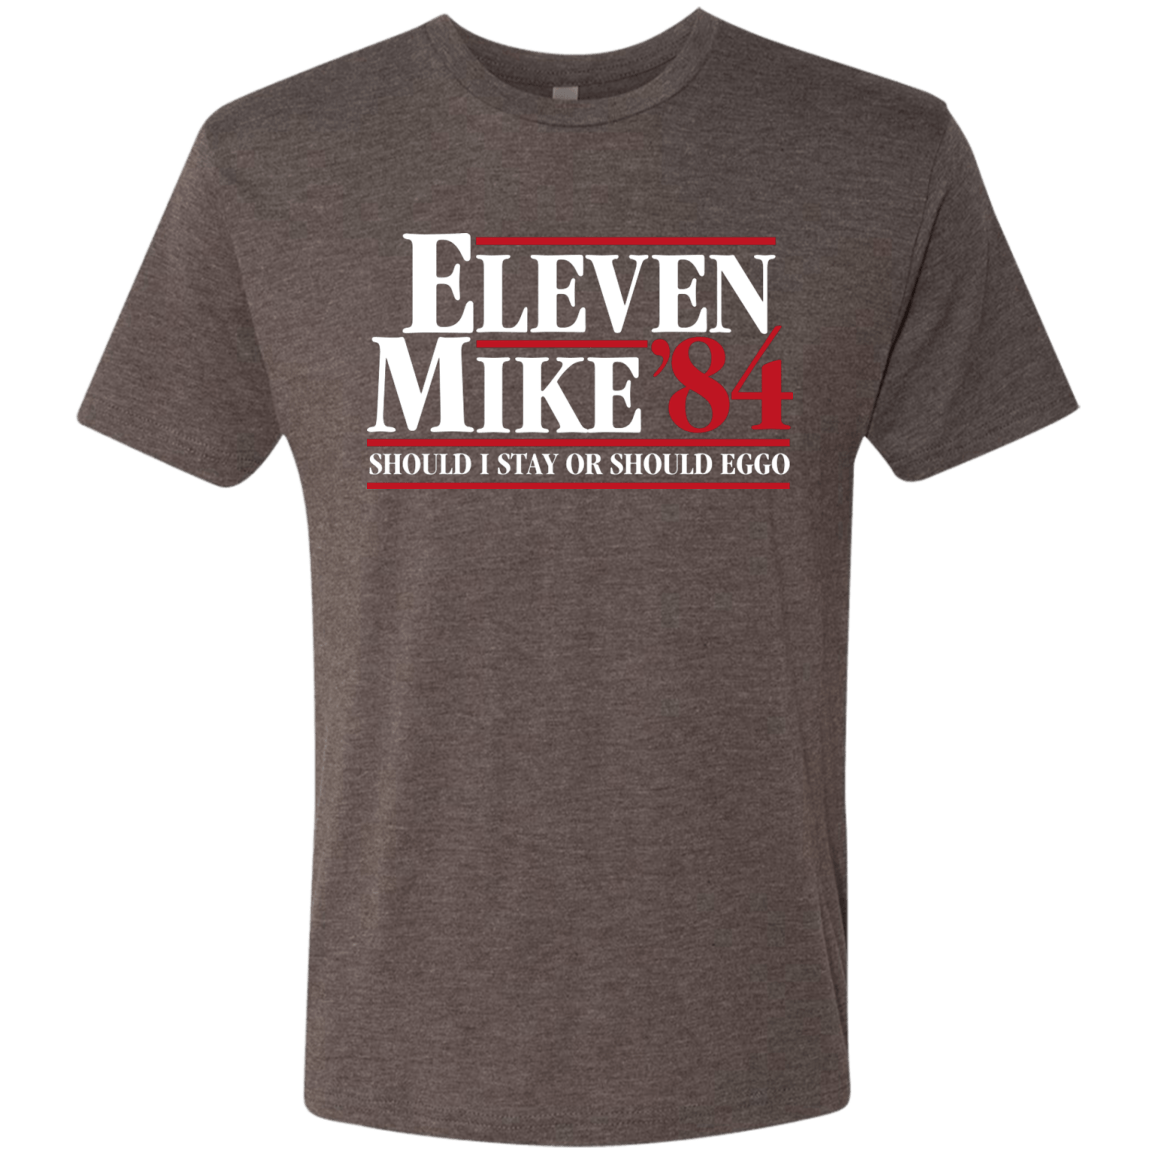 T-Shirts Macchiato / Small Eleven Mike 84 - Should I Stay or Should Eggo Men's Triblend T-Shirt